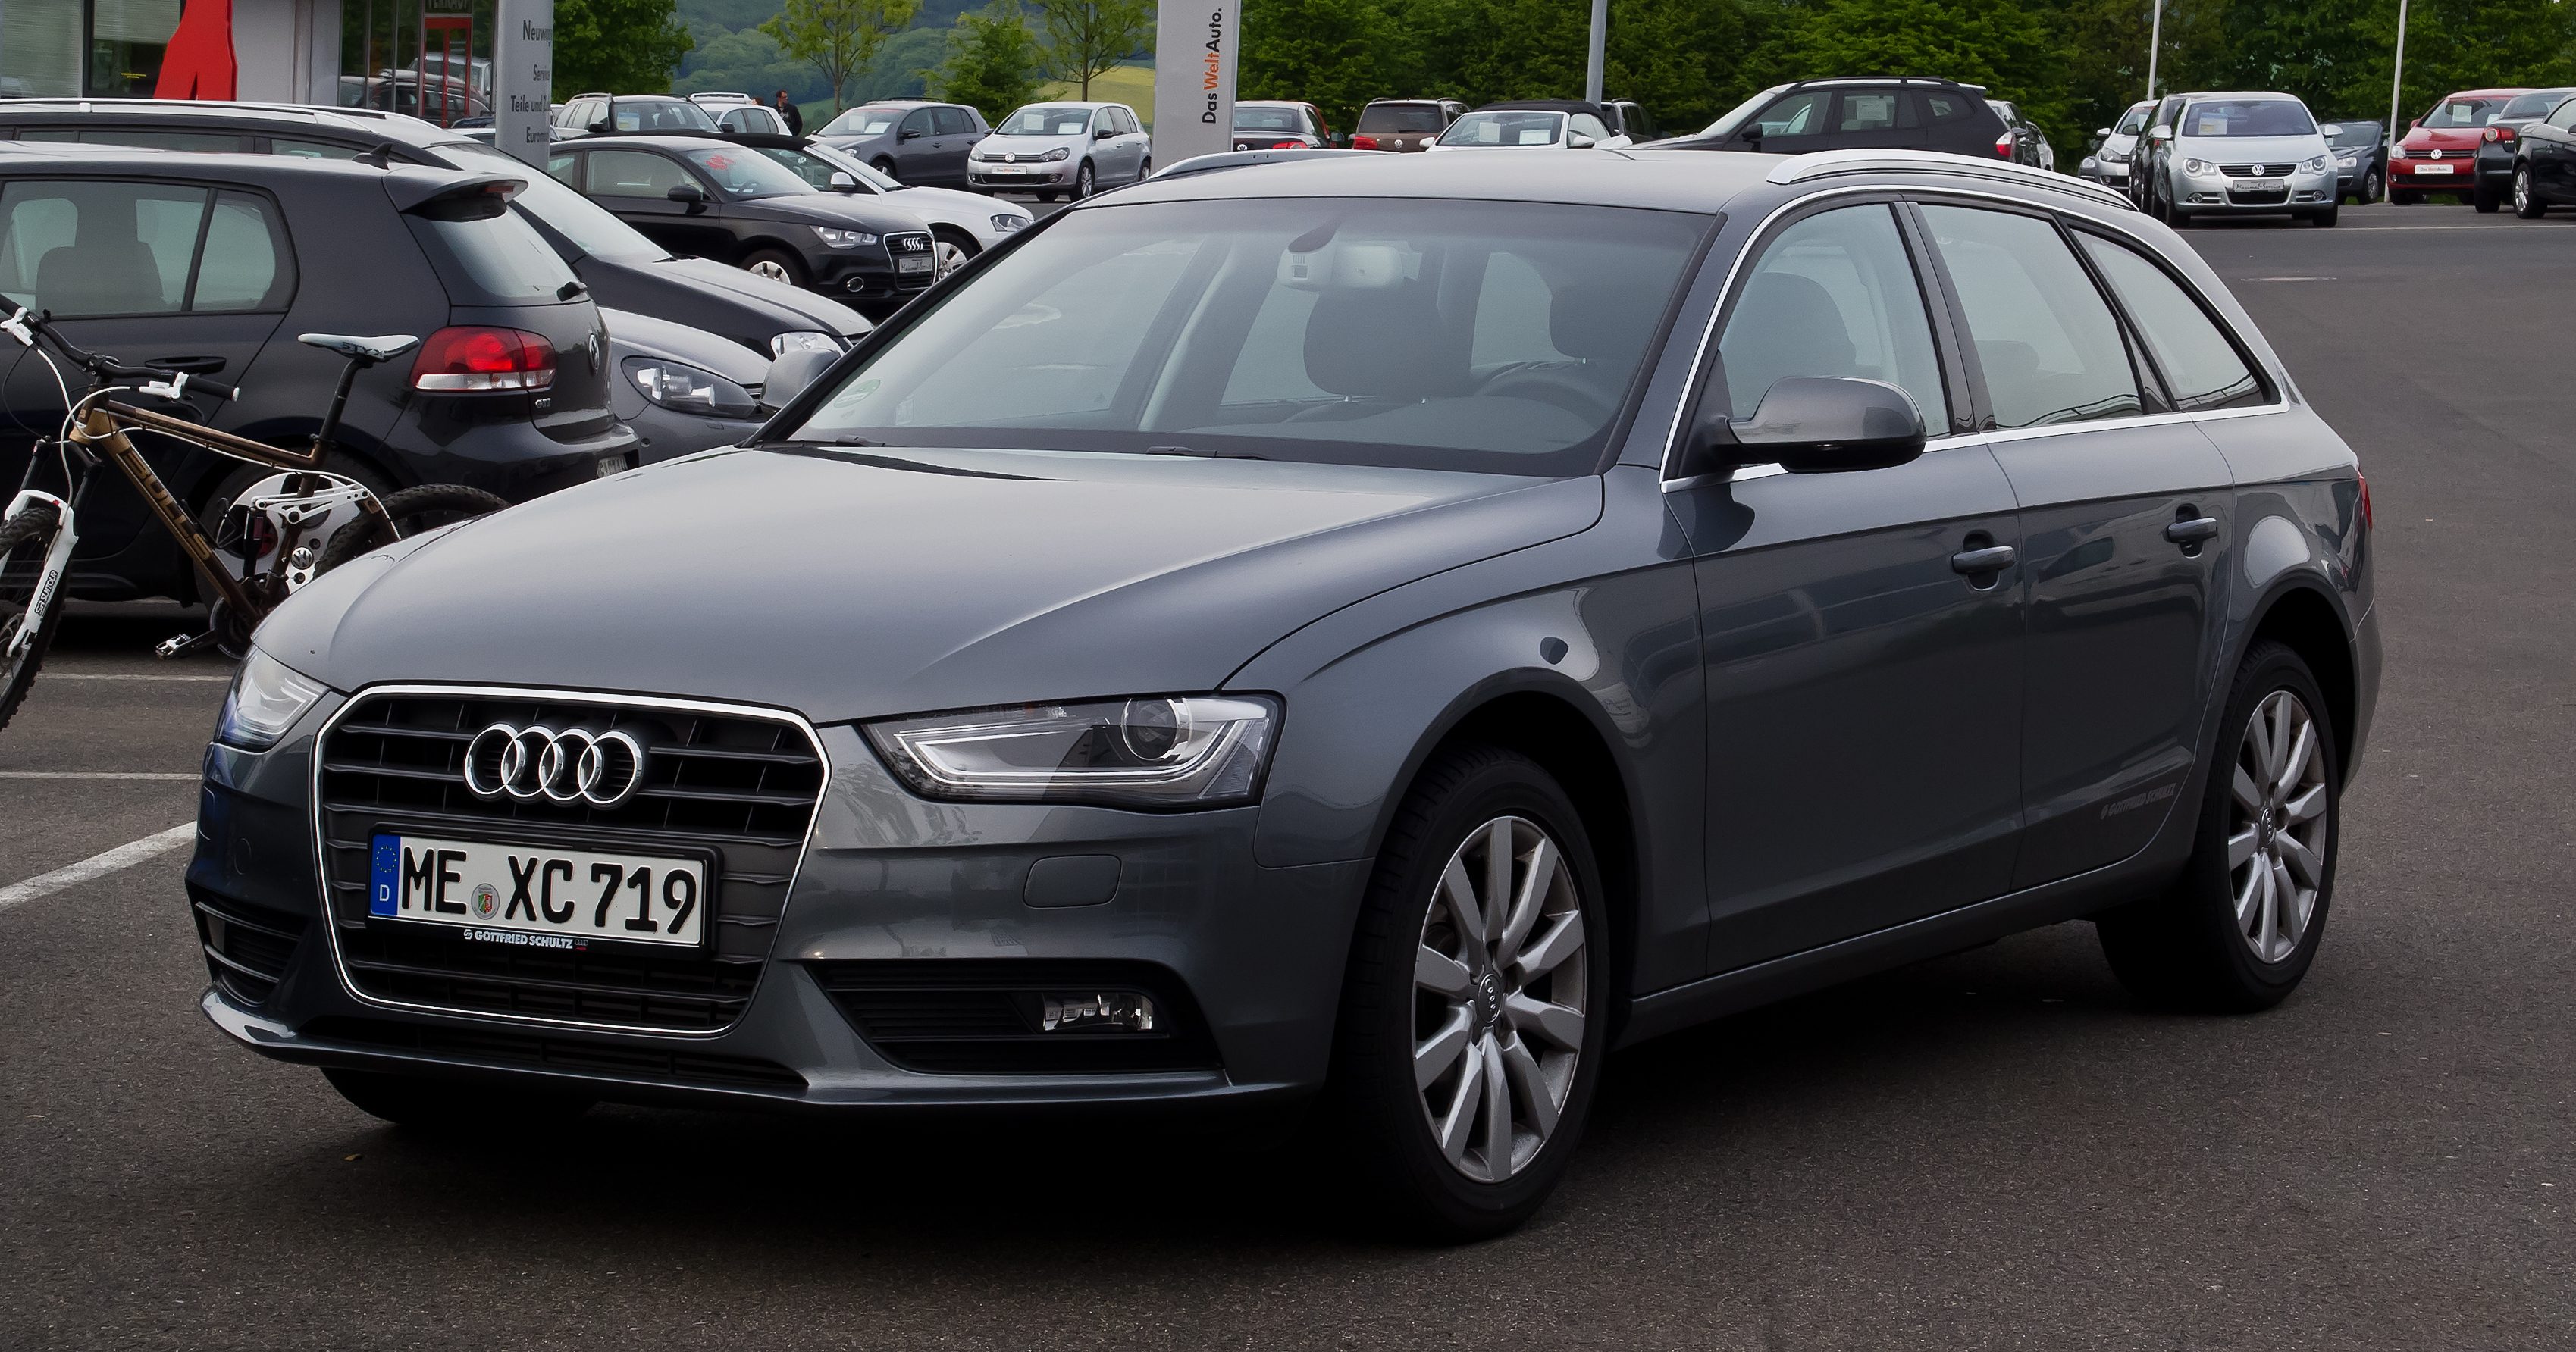 Audi_A4_Avant_2.0_TDI_Ambiente_(B8,_Facelift)_%E2%80%93_Frontansicht,_17._Mai_2012,_Velbert.jpg